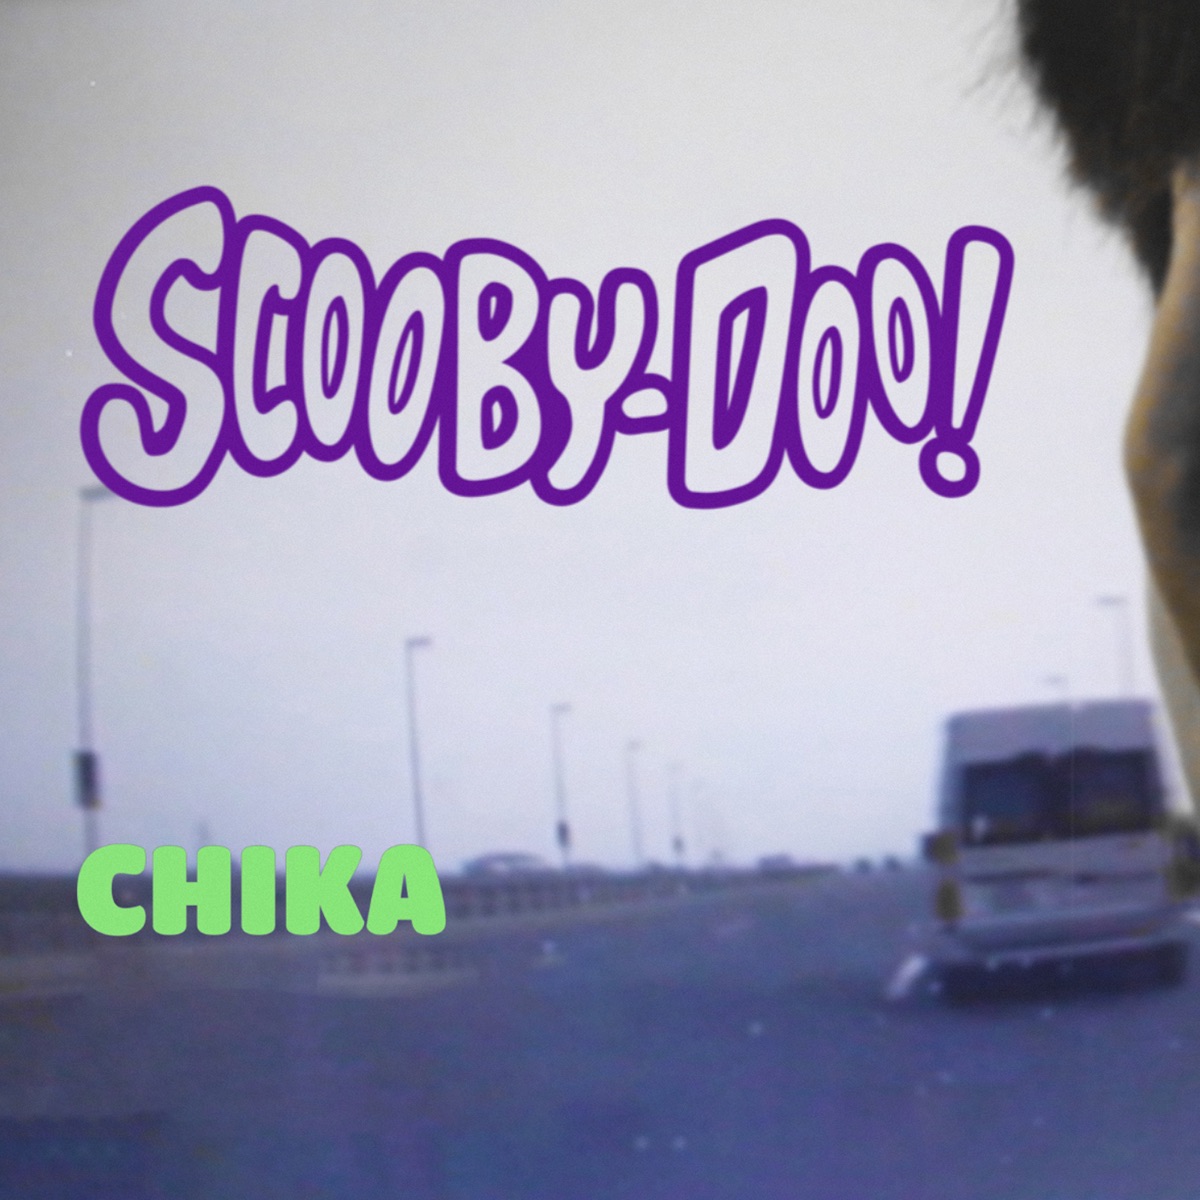 Scooby-Doo! - Single - Album by CHIKA - Apple Music